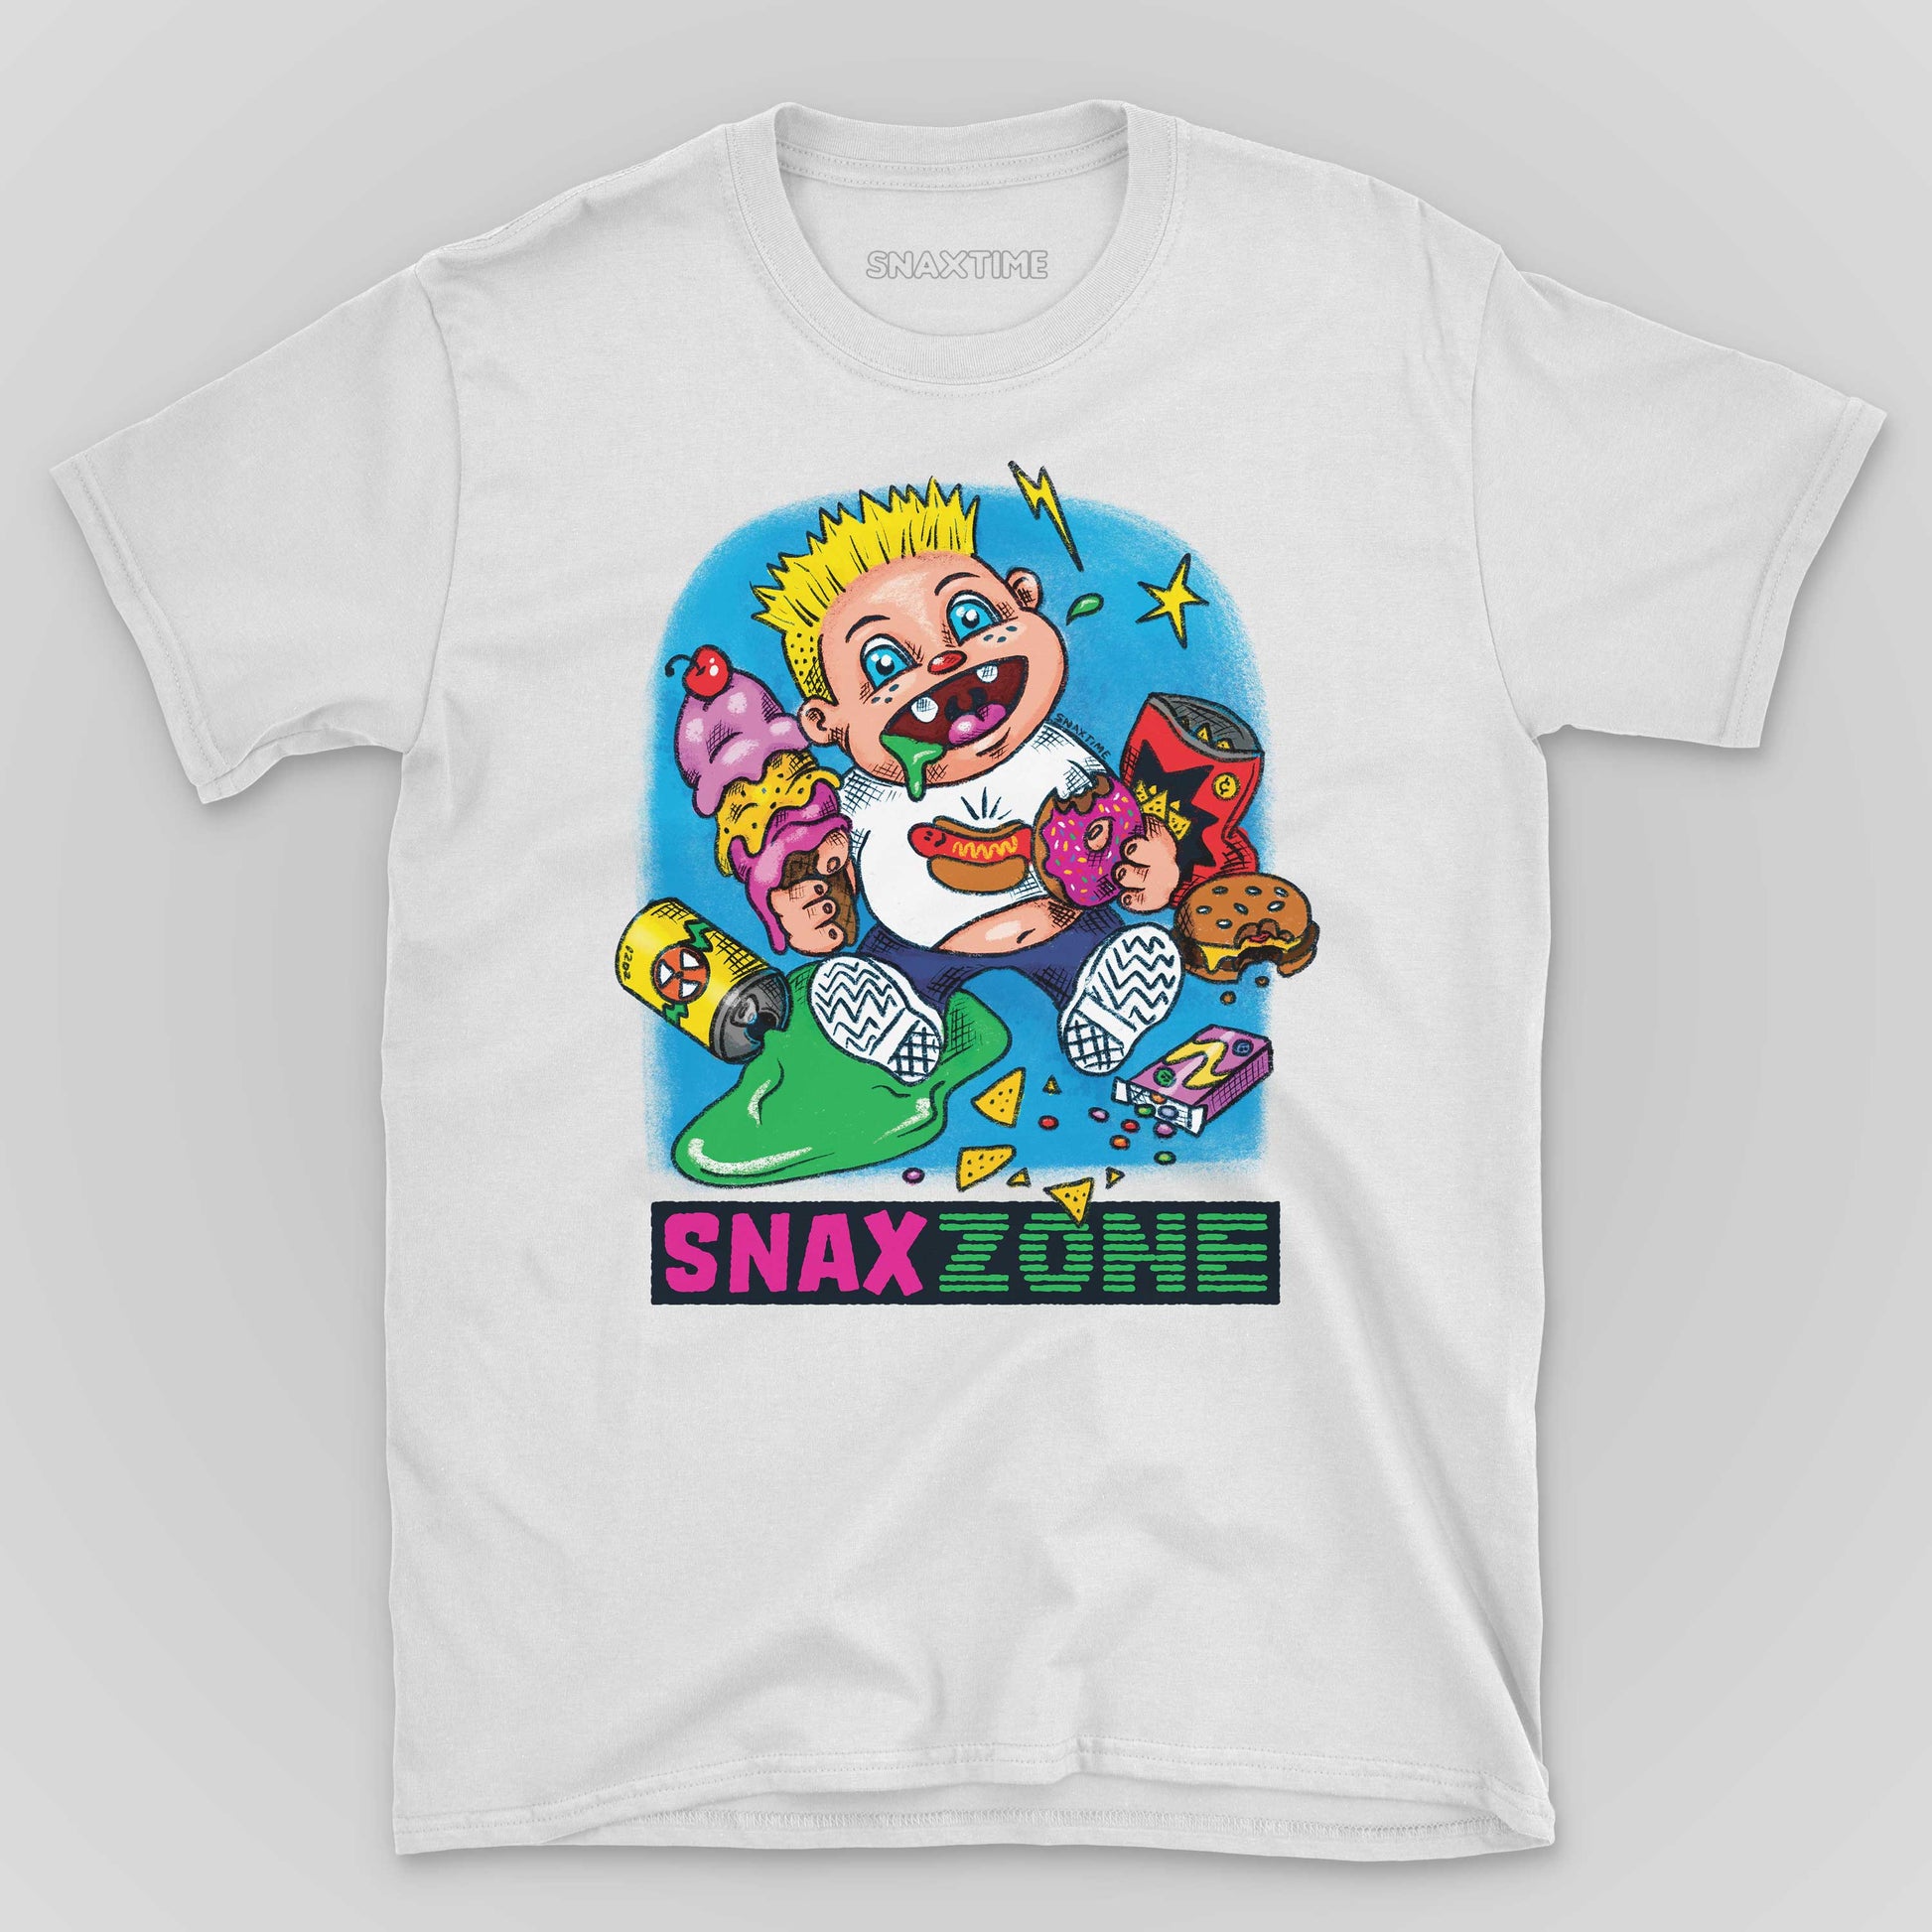 White Snax Zone Cartoon Junk Food T-Shirt by Snaxtime